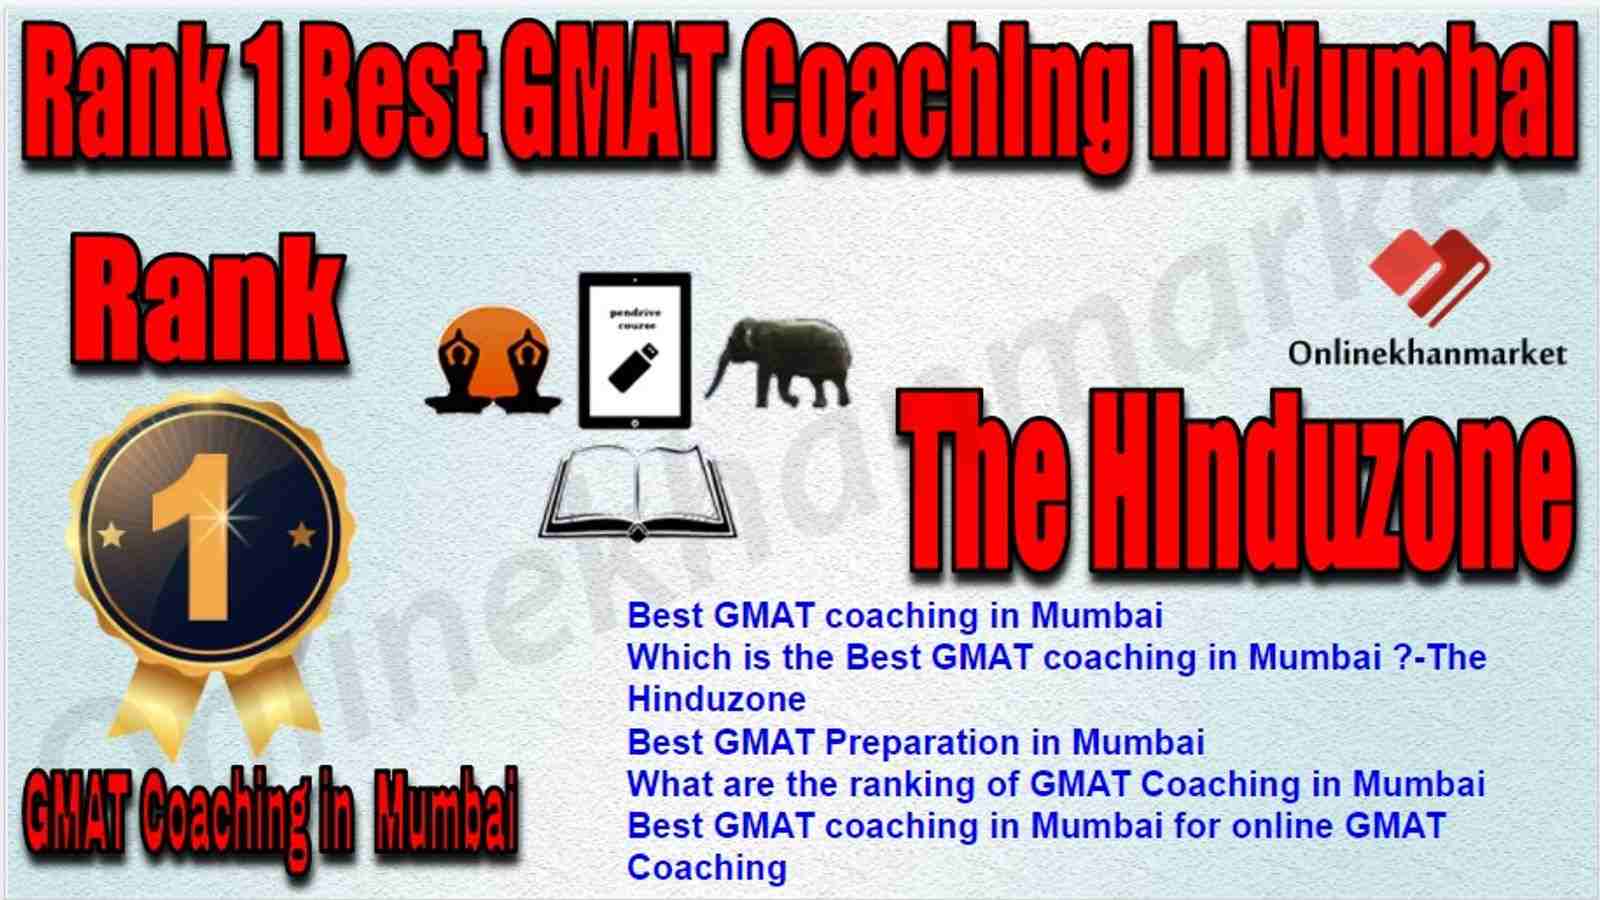 Rank 1 Best GMAT Coaching in Mumbai